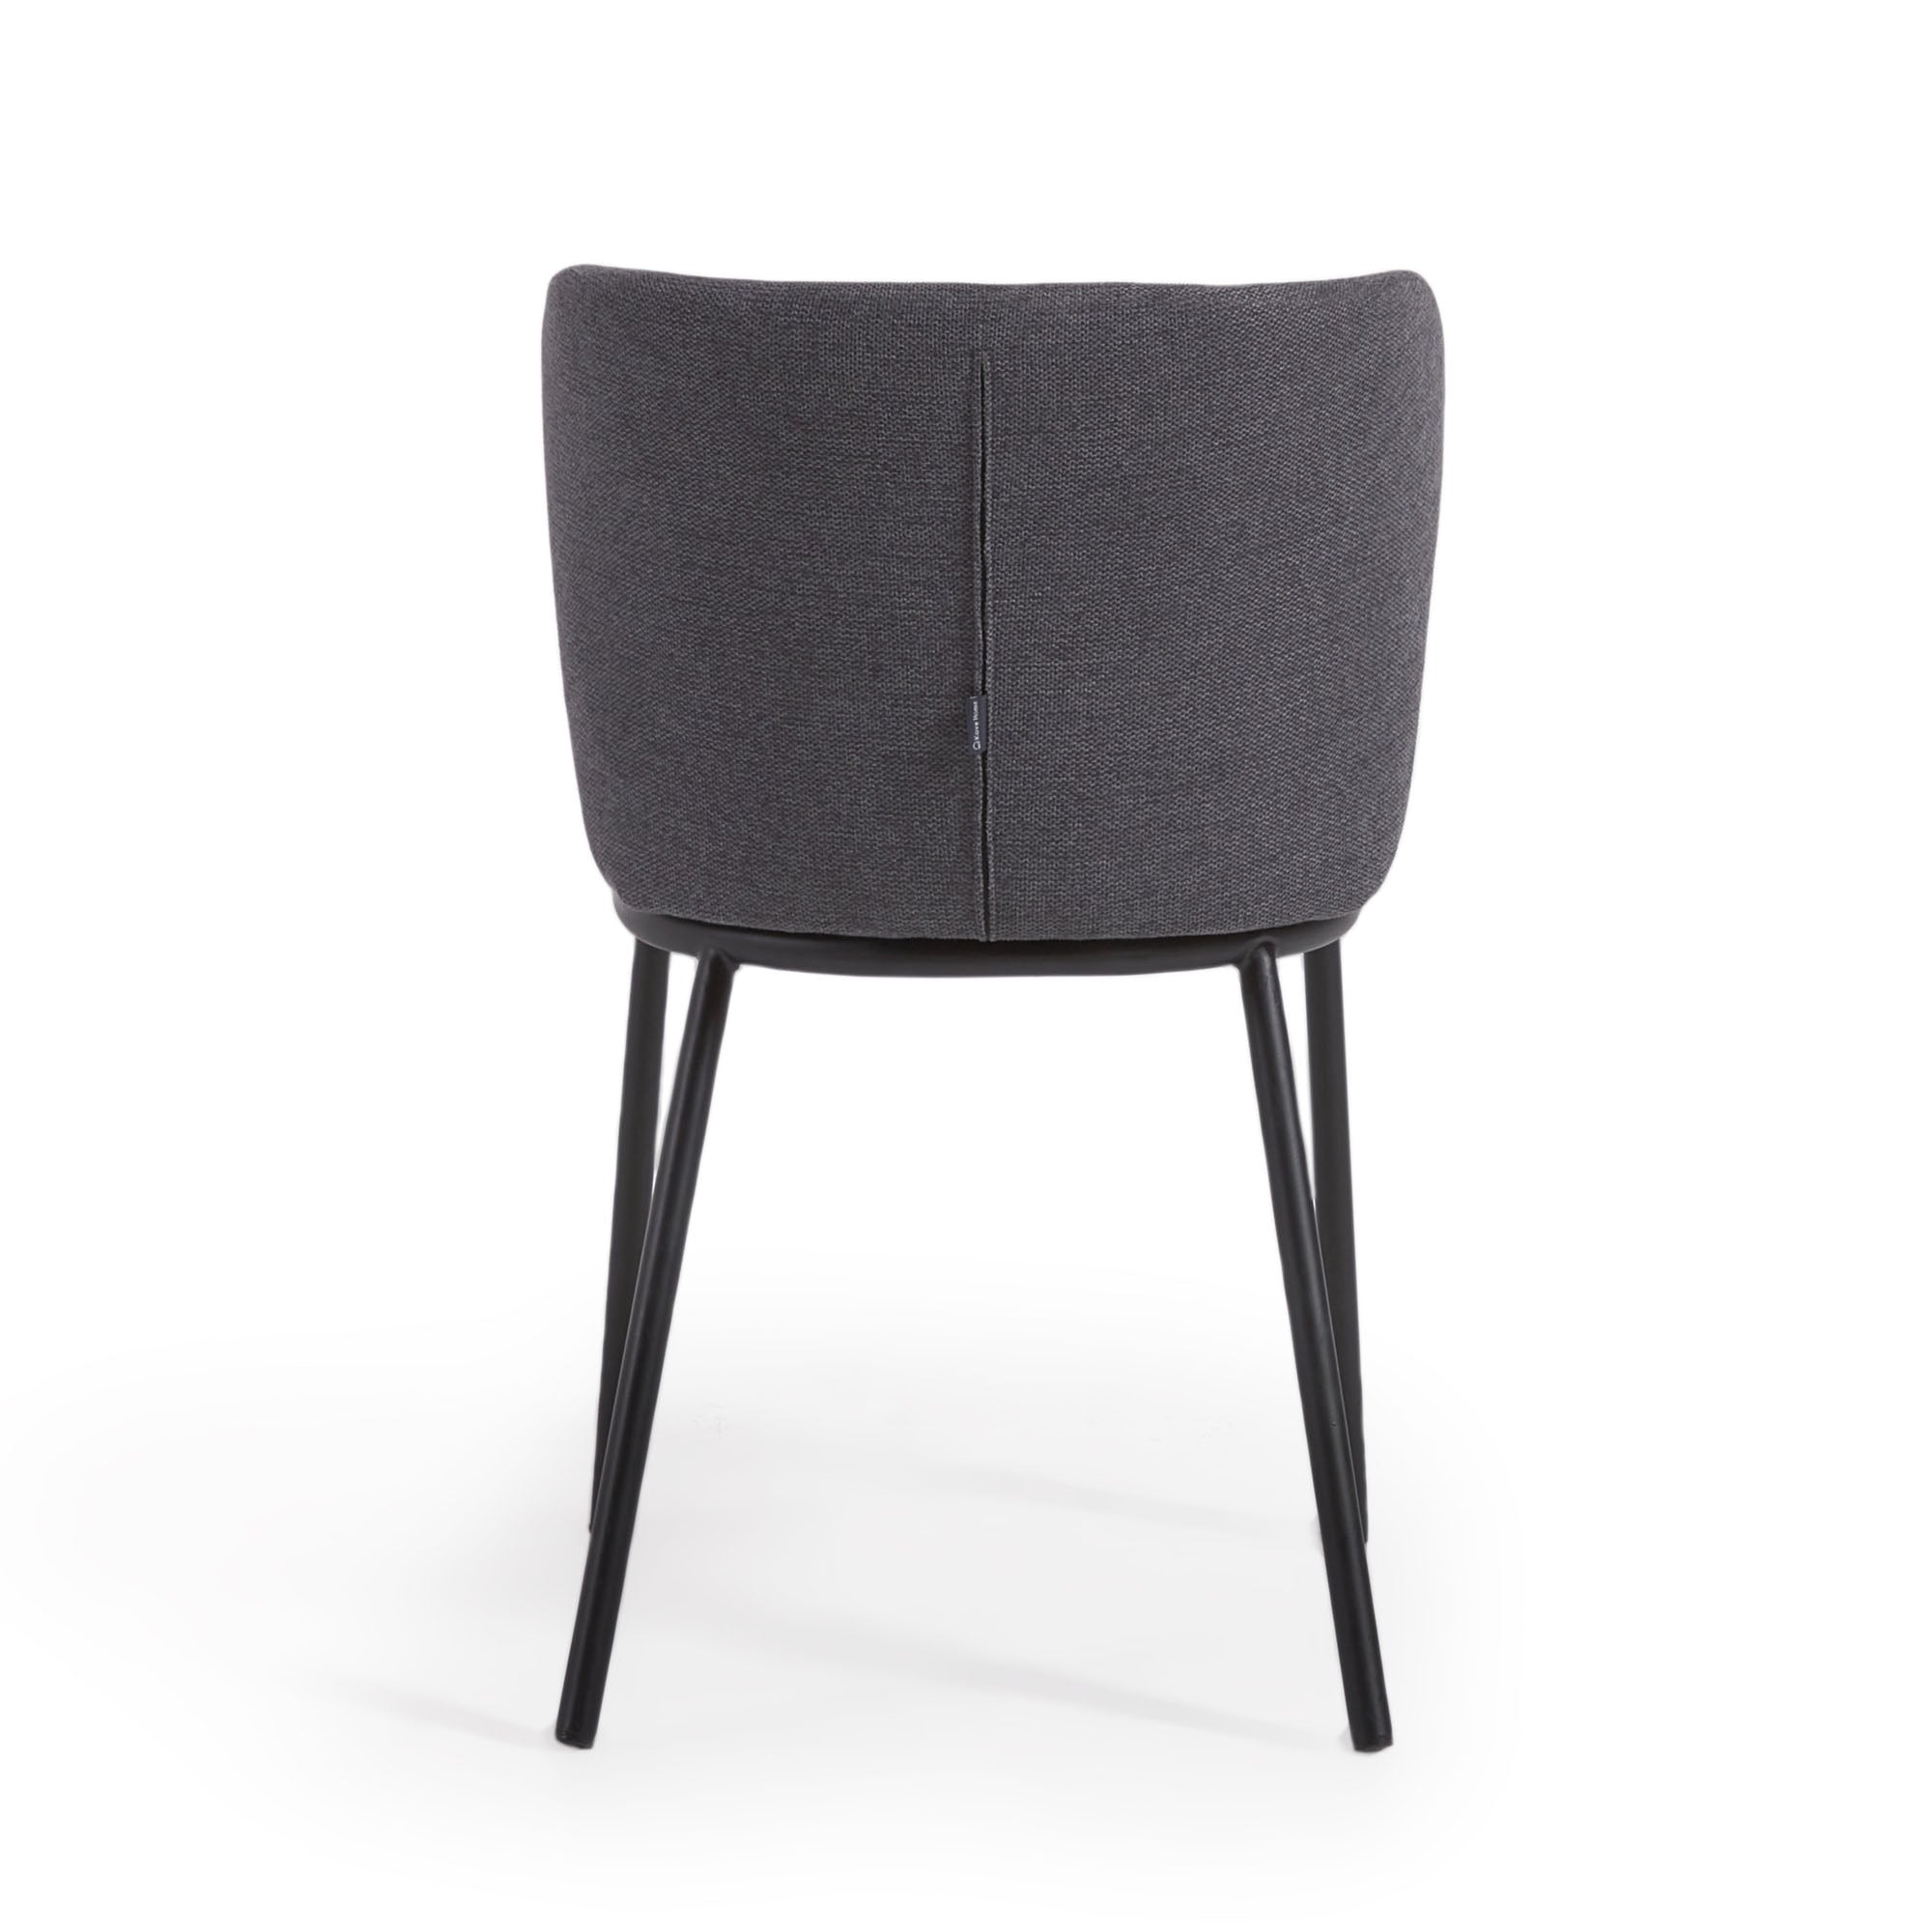 Ciselia chair in dark grey chenille and black steel